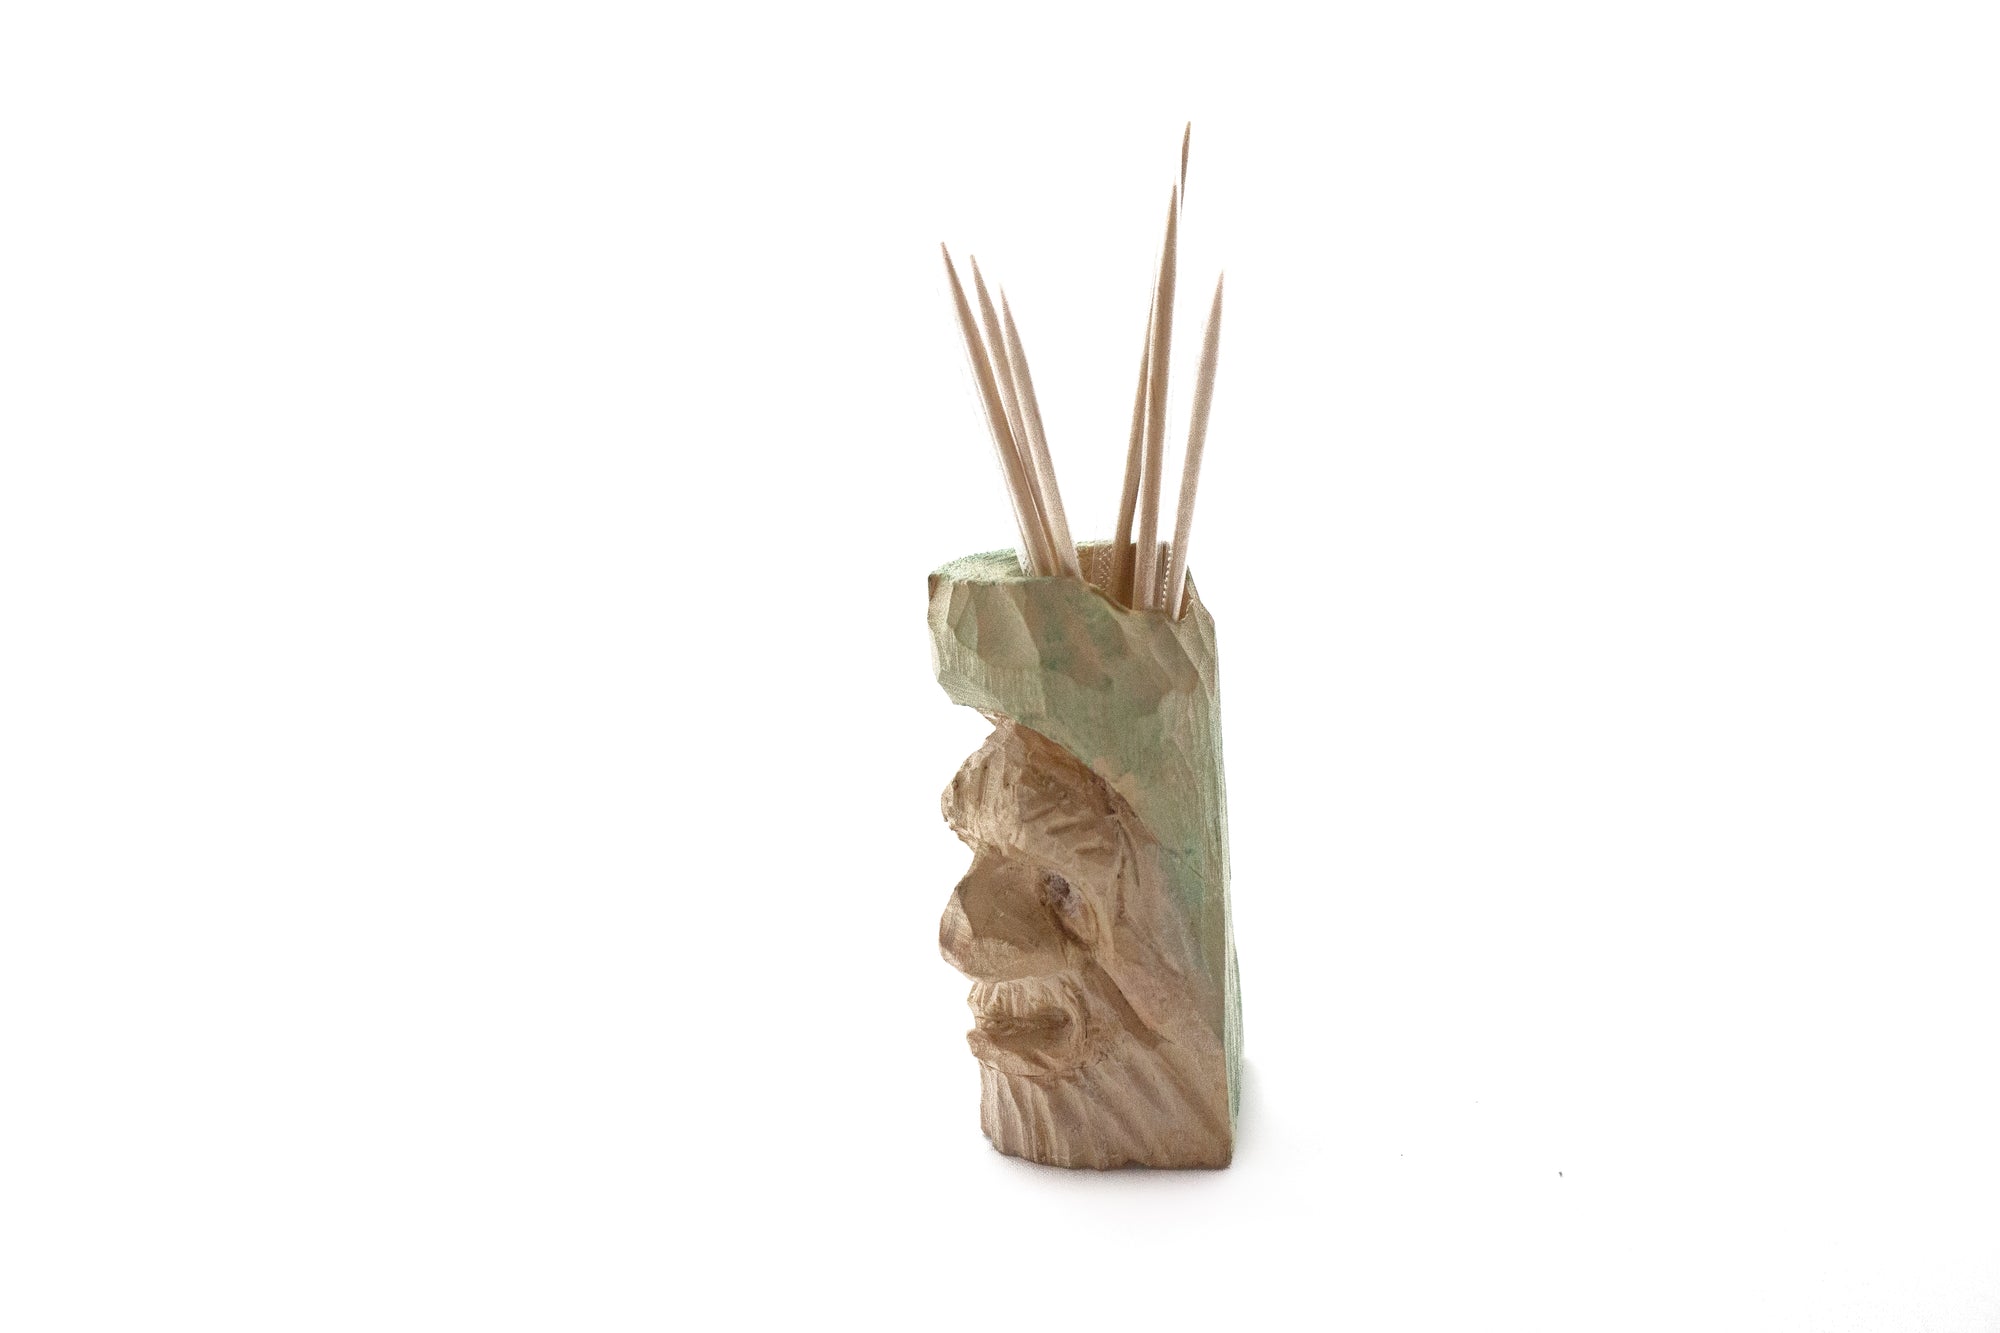 Carved Toothpick Holder Wood Carving